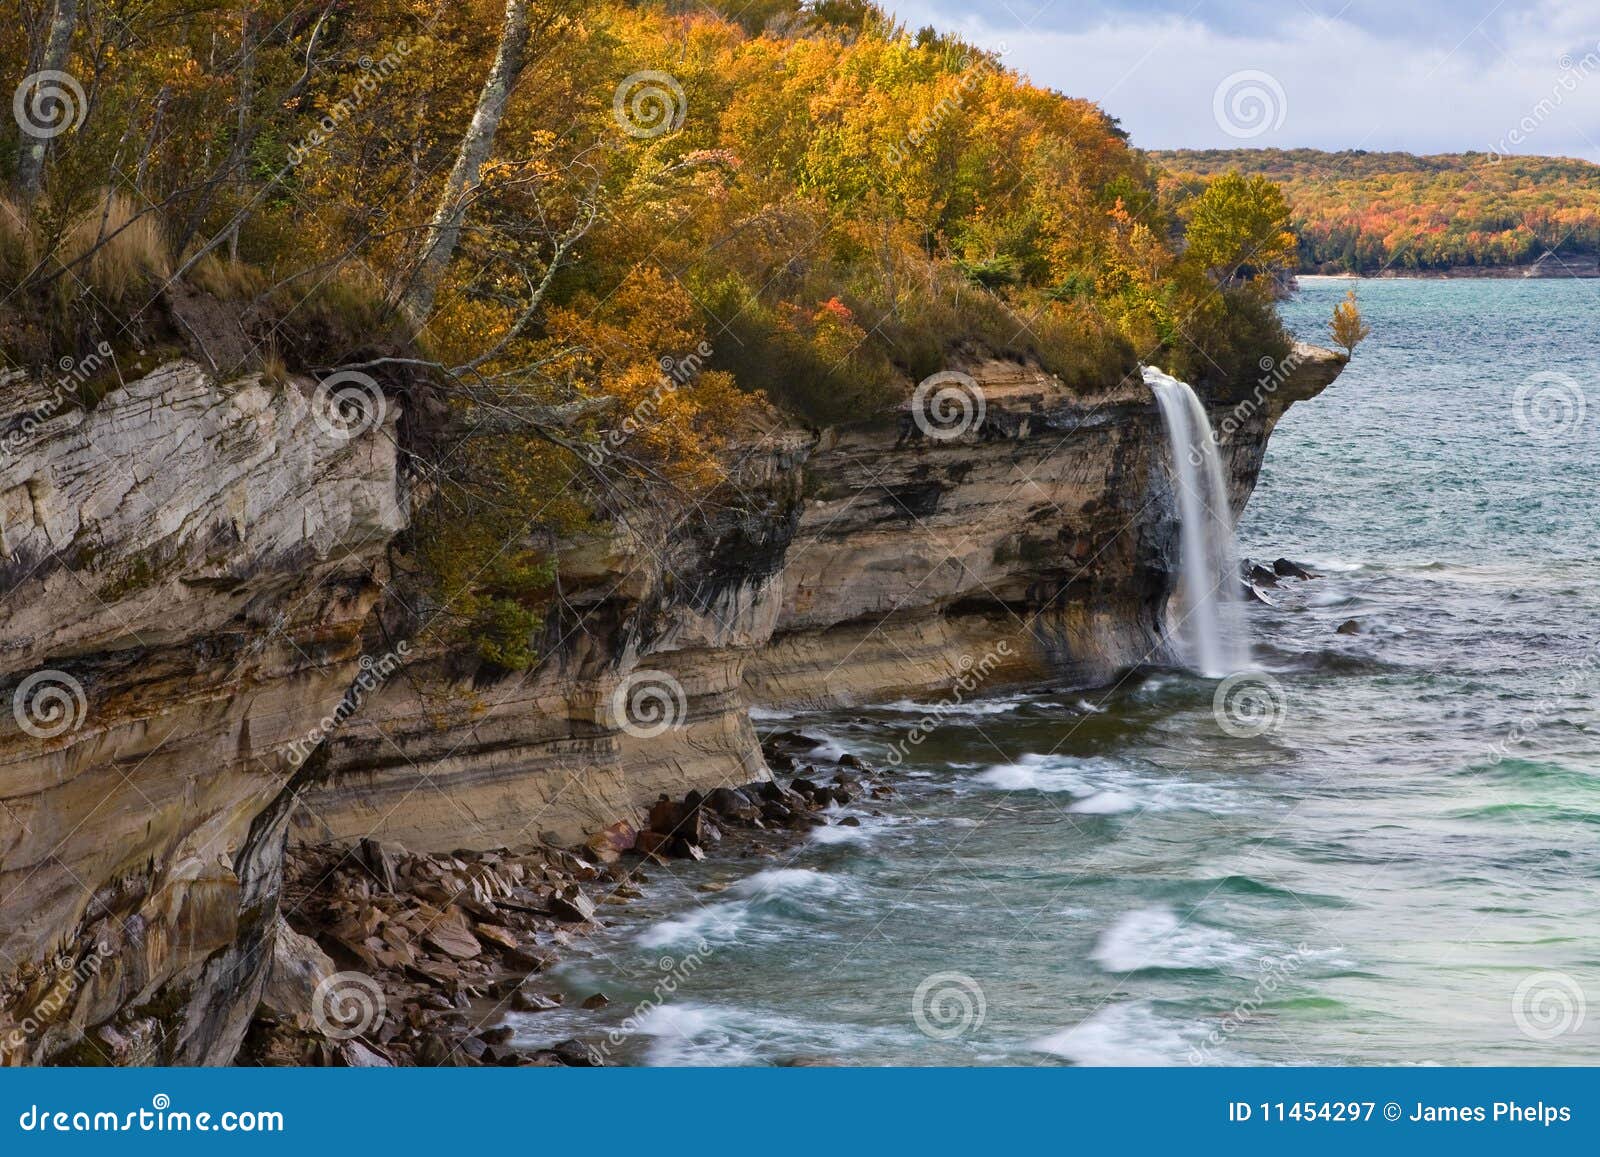 michigan upper peninsula waterfall in autumn